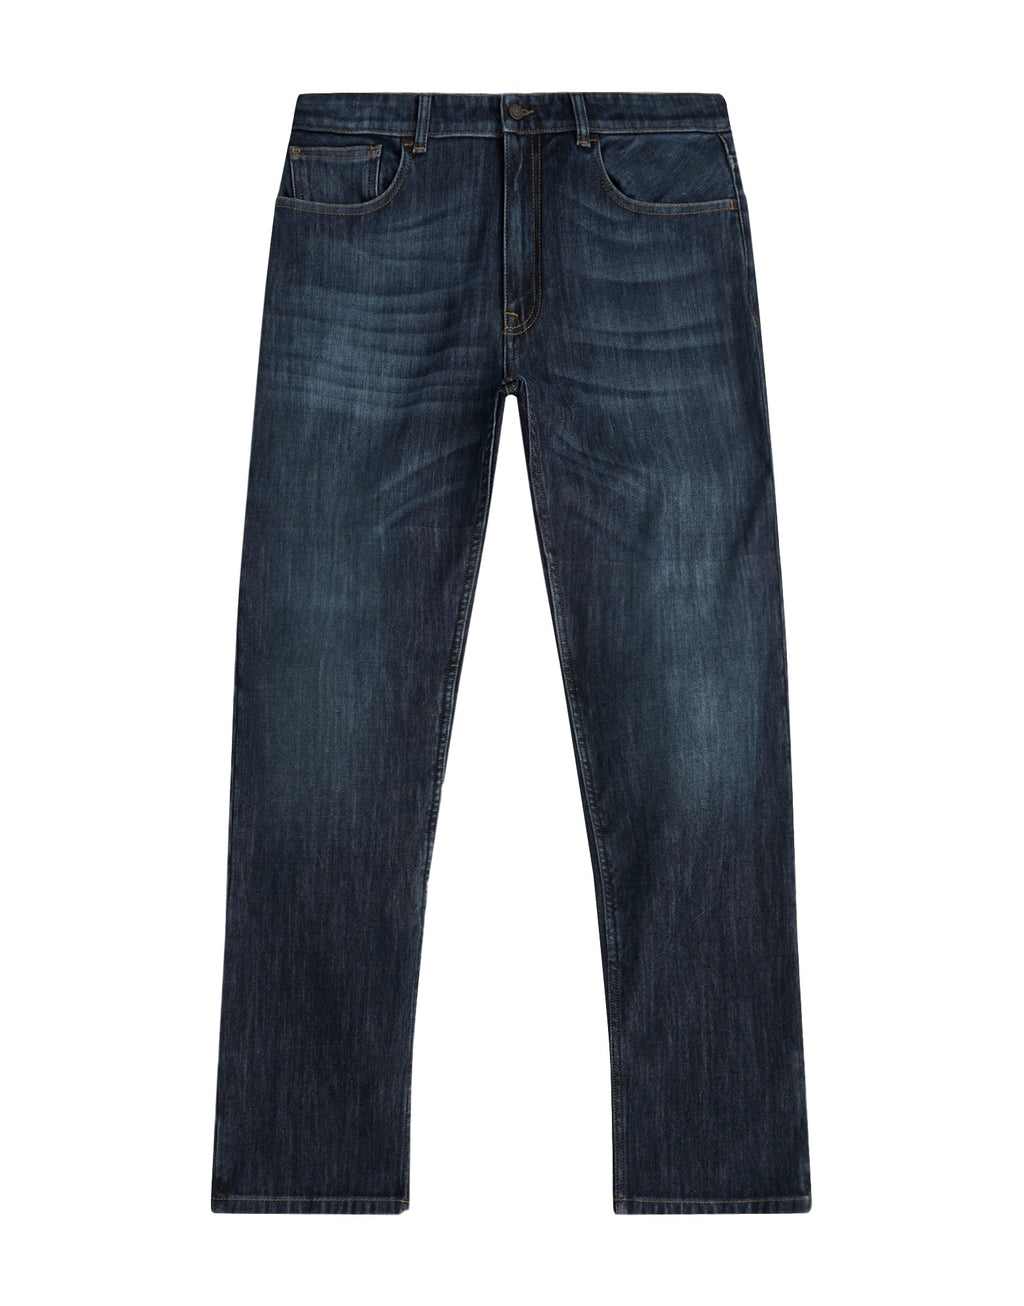 Belstaff - Long Way Up - Charley Denim Jeans